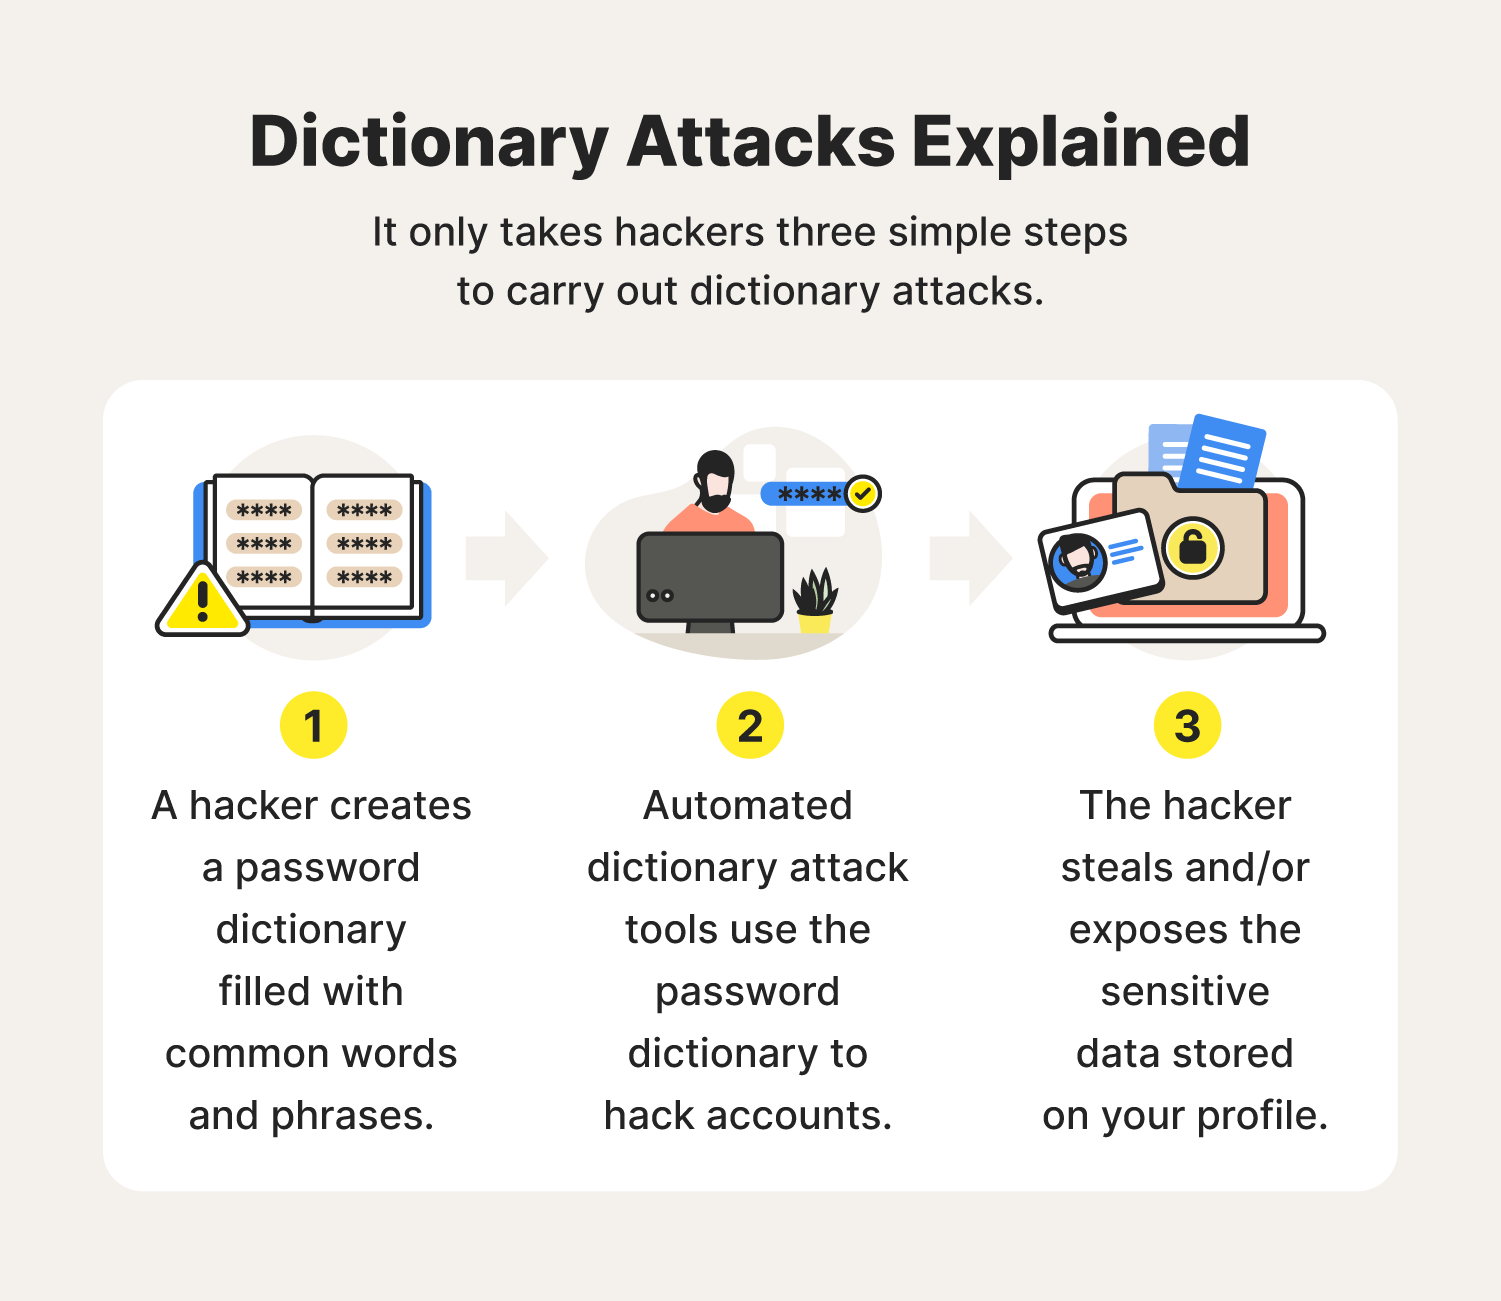 Dictionary attacks explained